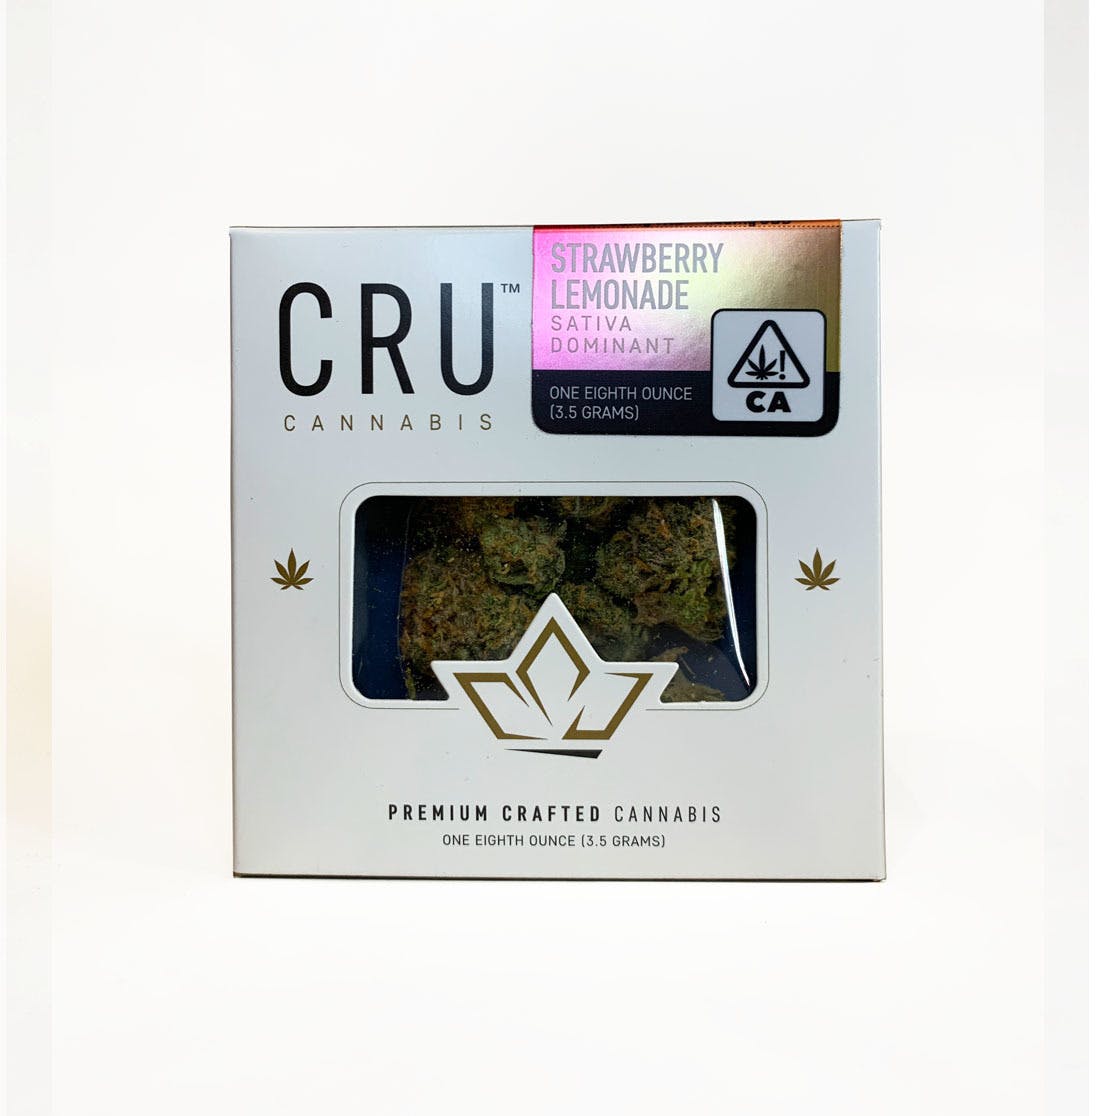 CRU Cannabis- Strawberry Lemonade